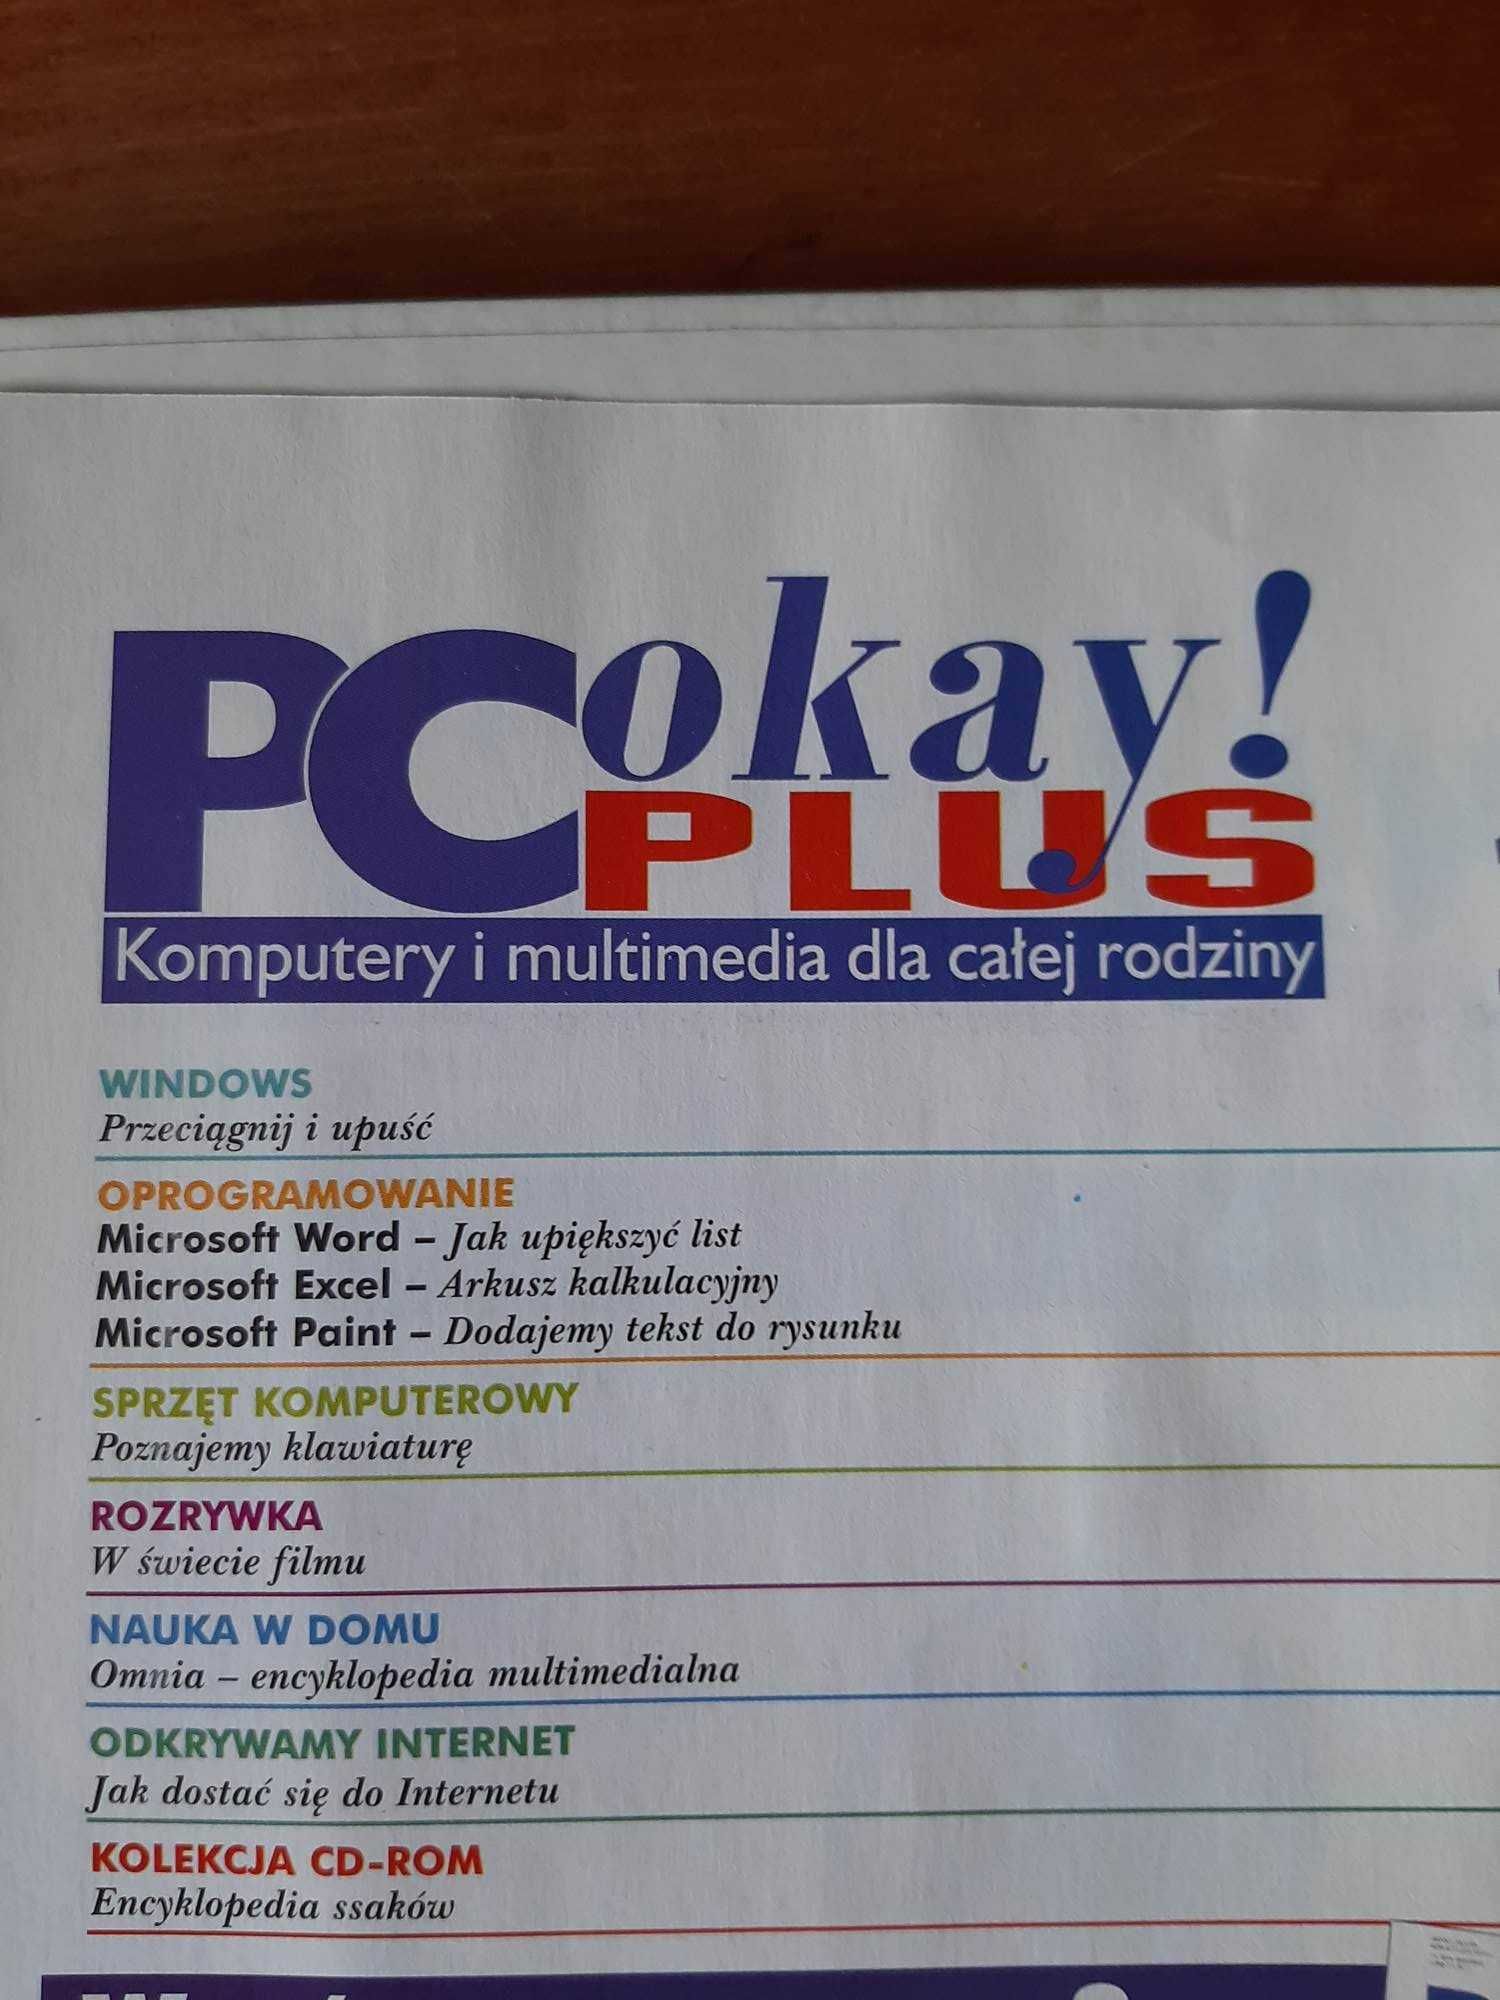 Czasopismo czasopisma PC okay! PLUS nr 1-6 segregator BEZ PŁYT CD-ROM